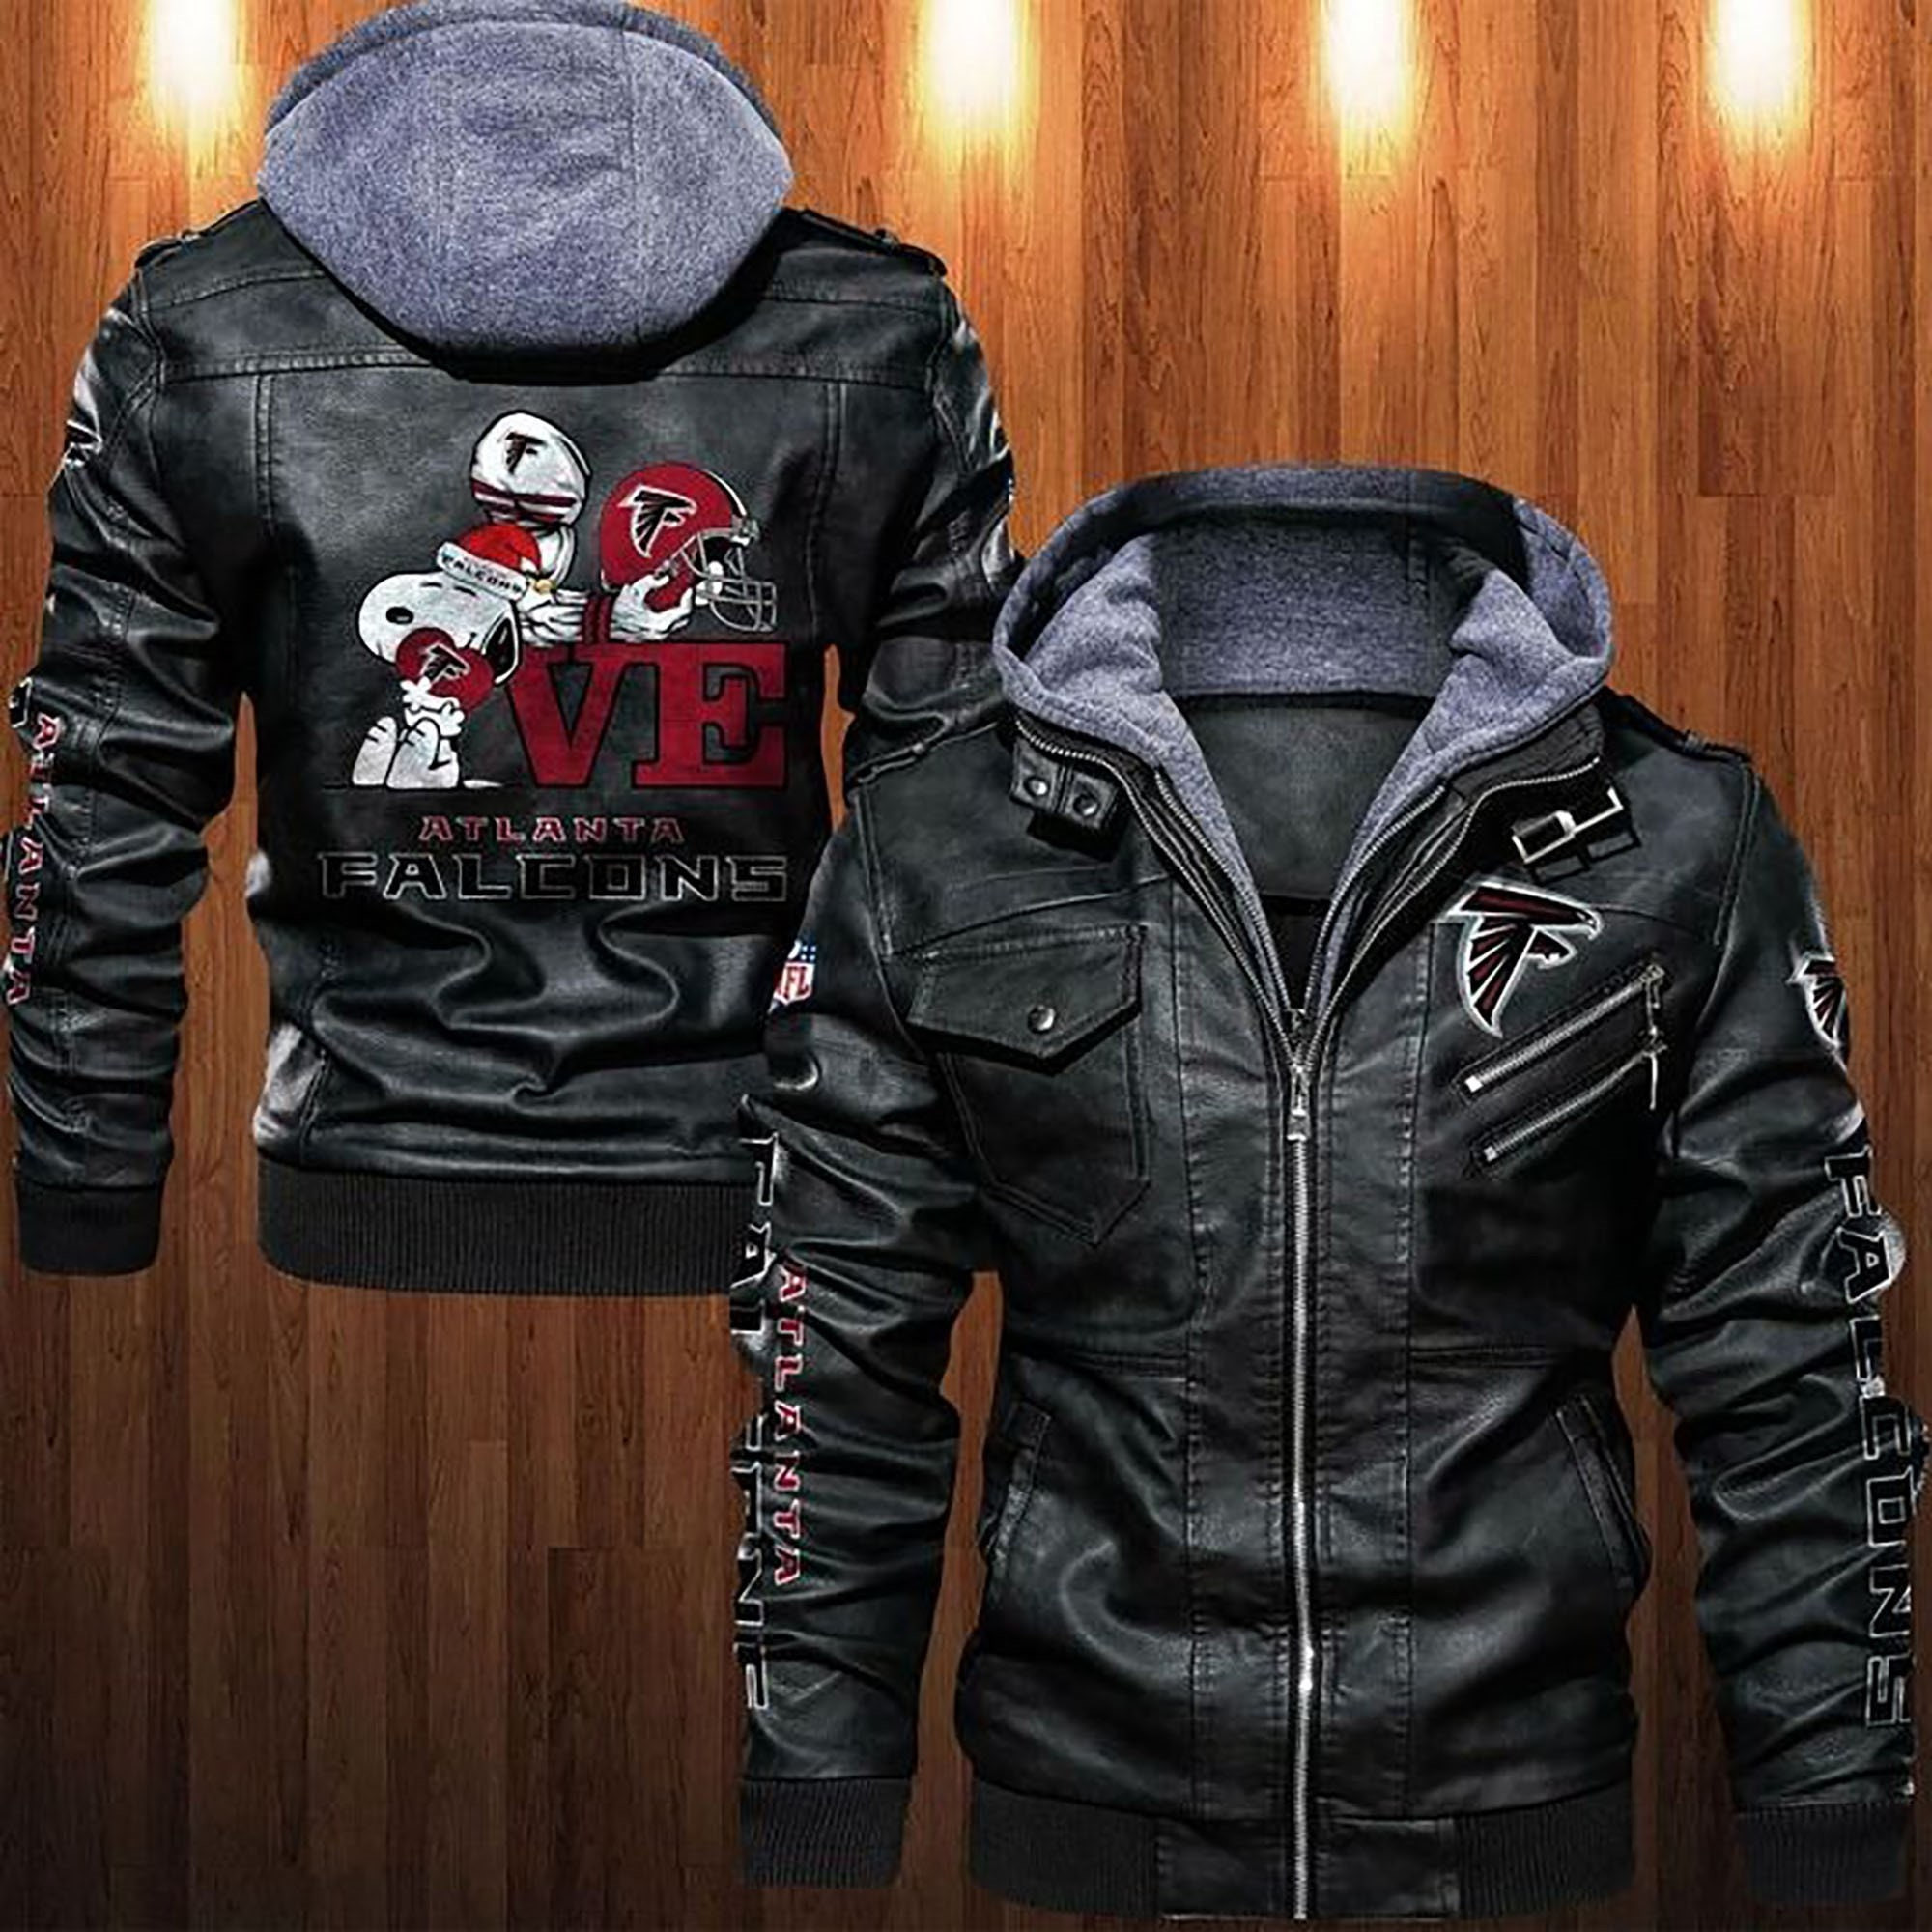 Choosing Leather Jacket that looks good on you below 93